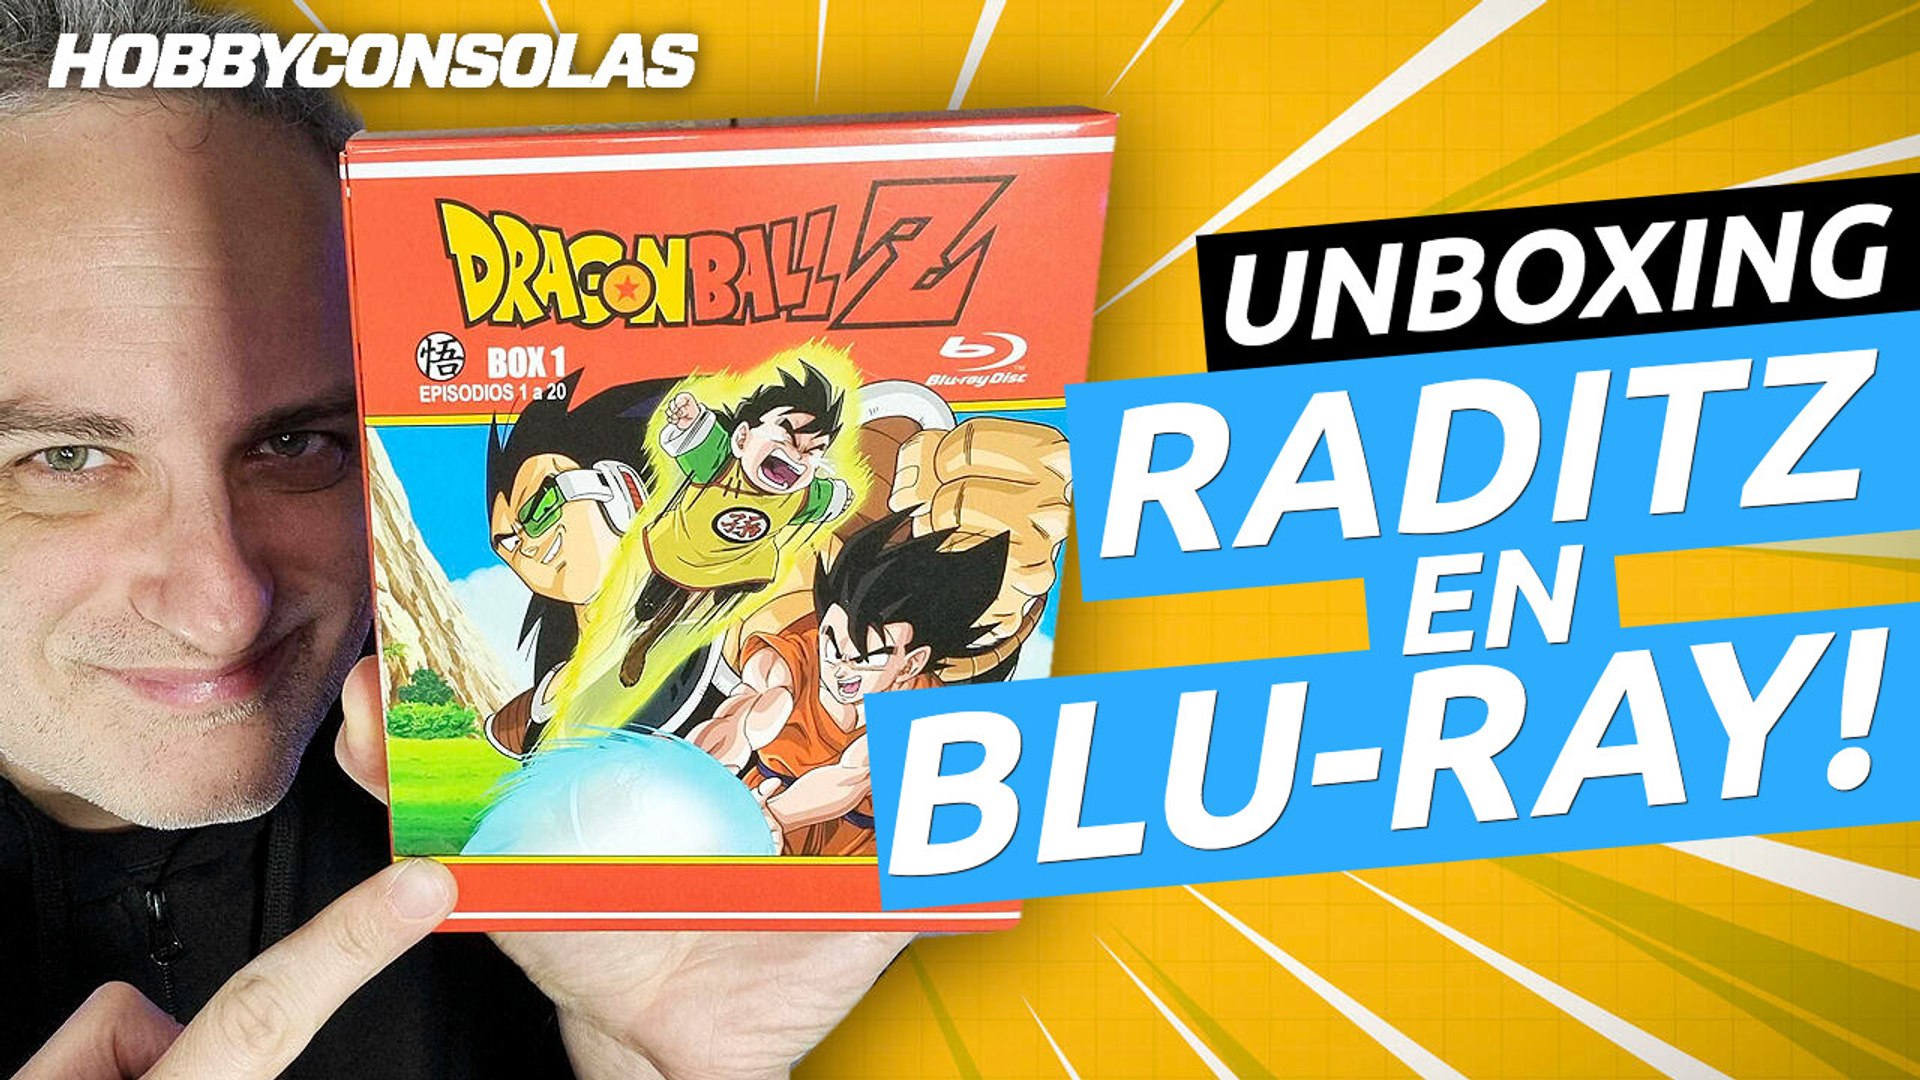 Unboxing Dragon Ball Peliculas en Blu-Ray - Vídeo Dailymotion